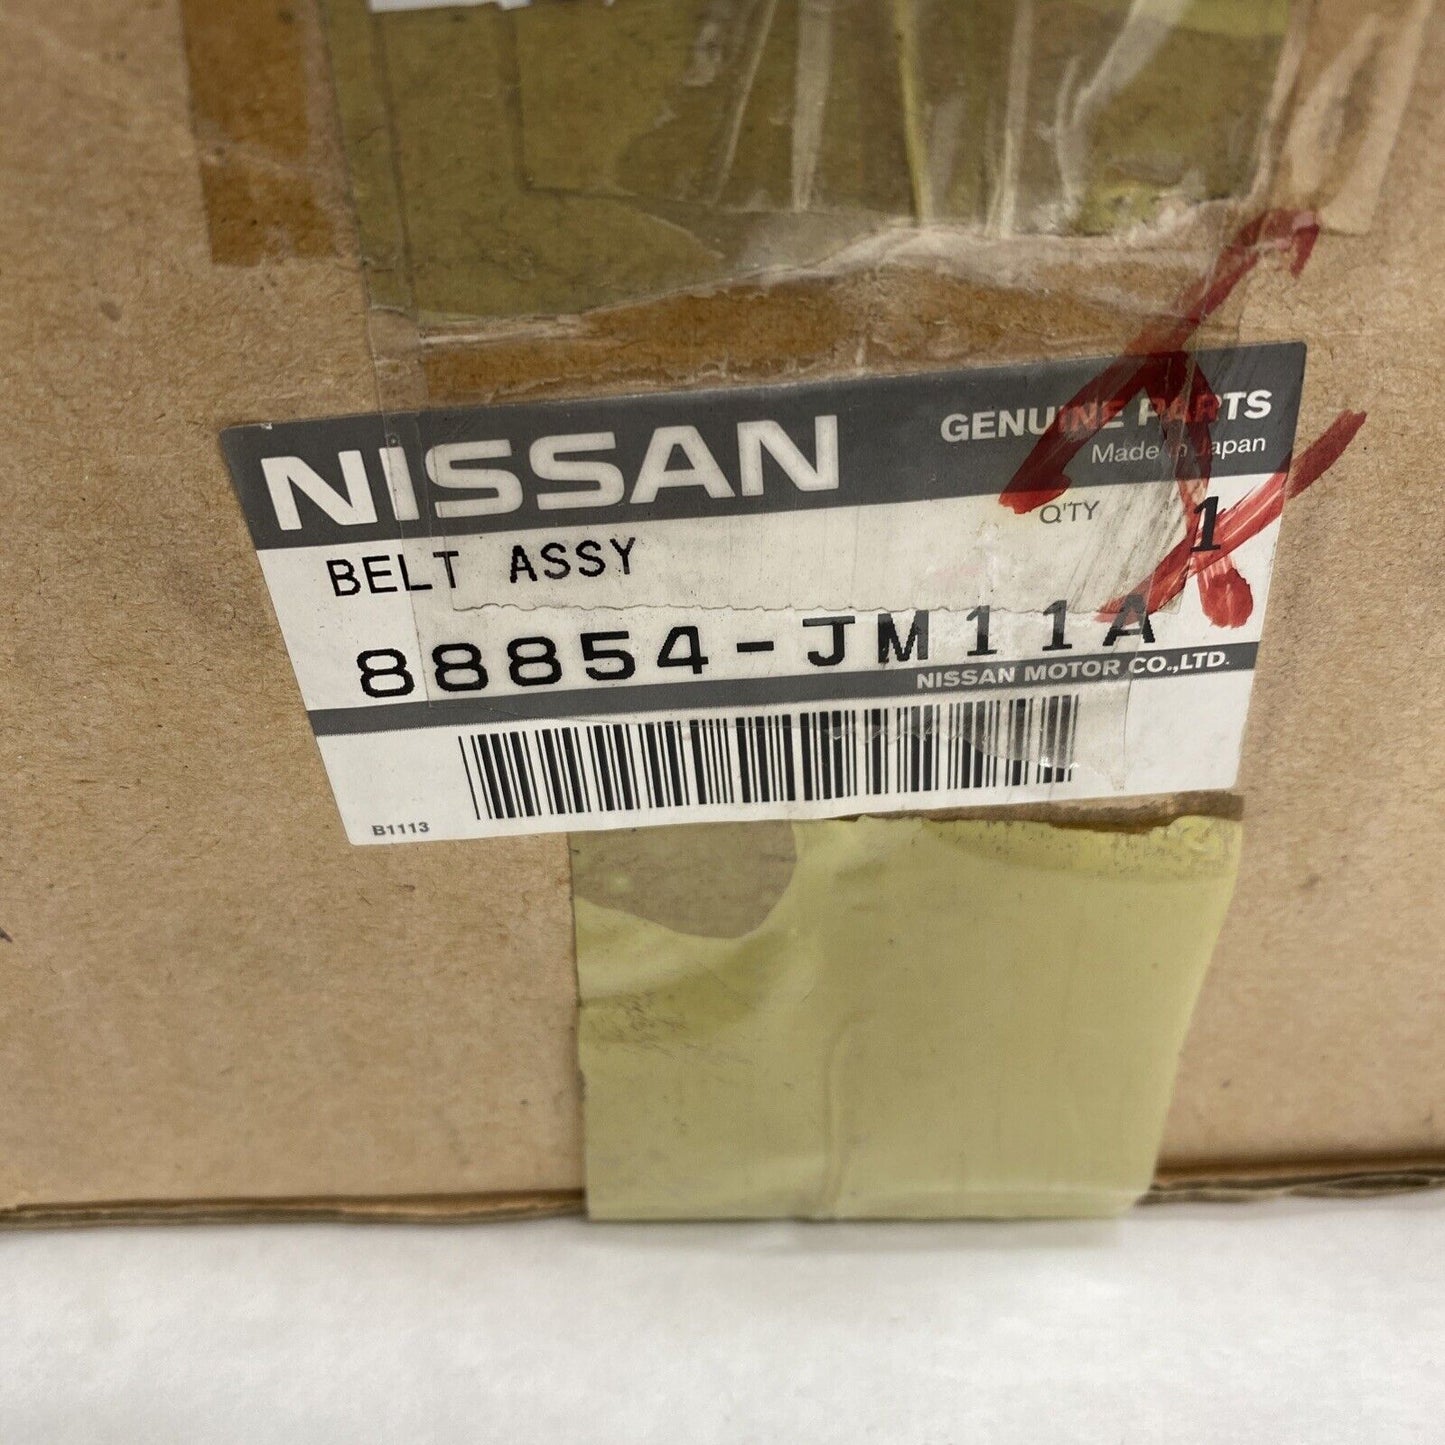 New OEM Nissan Rogue Seat Belt Assembly Center Rear 2010-15 88854-JM11A